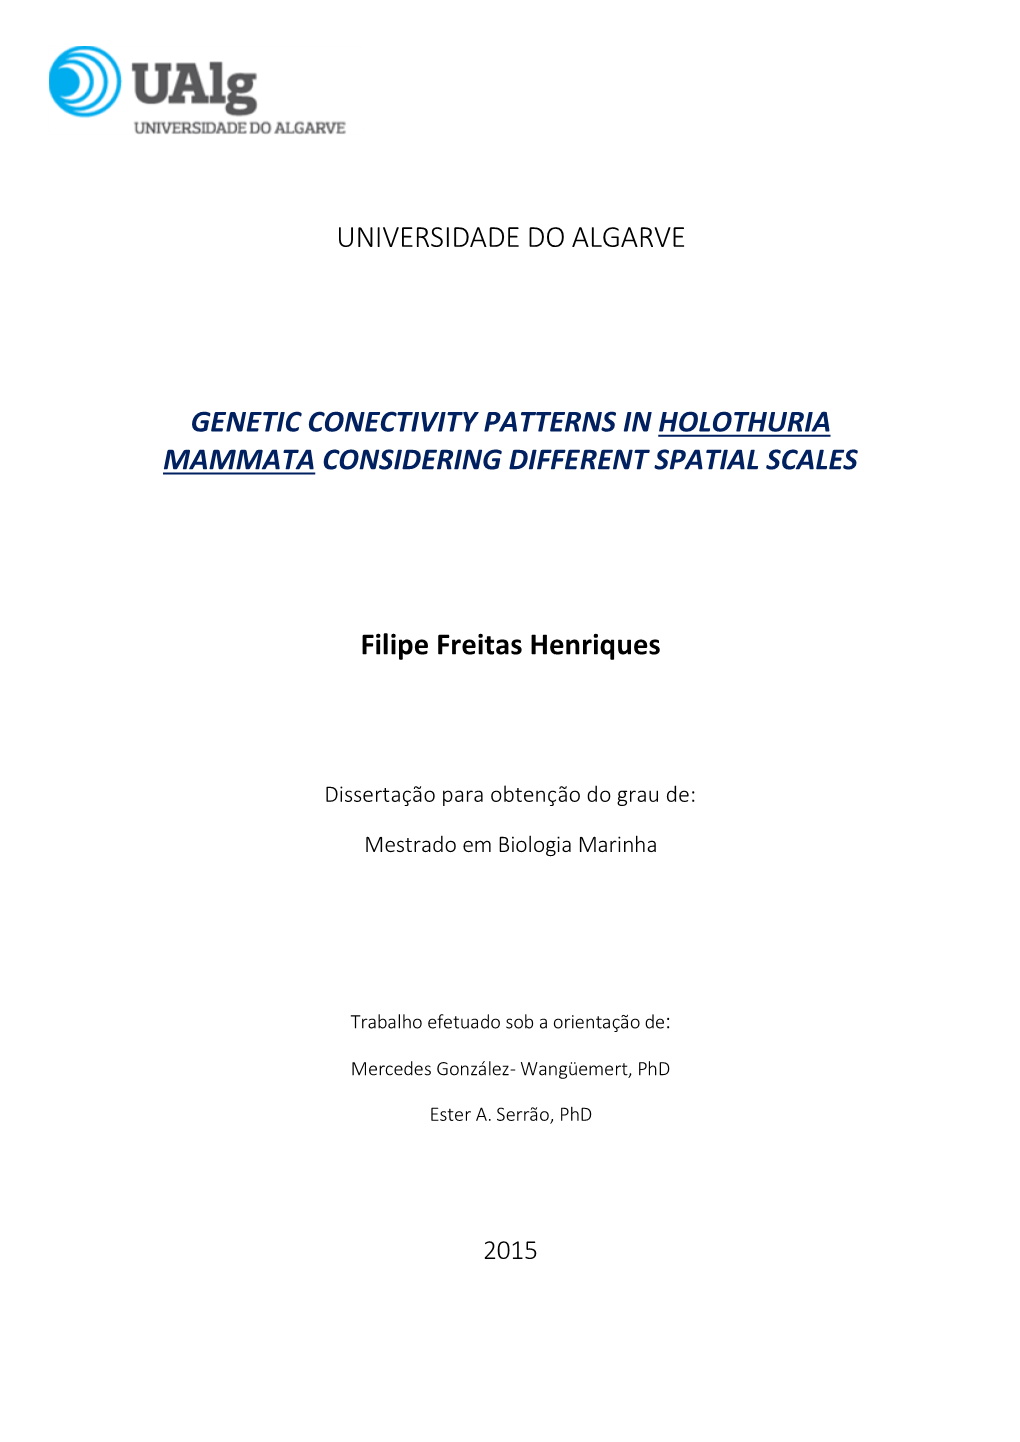 UNIVERSIDADE DO ALGARVE GENETIC CONECTIVITY PATTERNS in HOLOTHURIA MAMMATA CONSIDERING DIFFERENT SPATIAL SCALES Filipe Freitas H